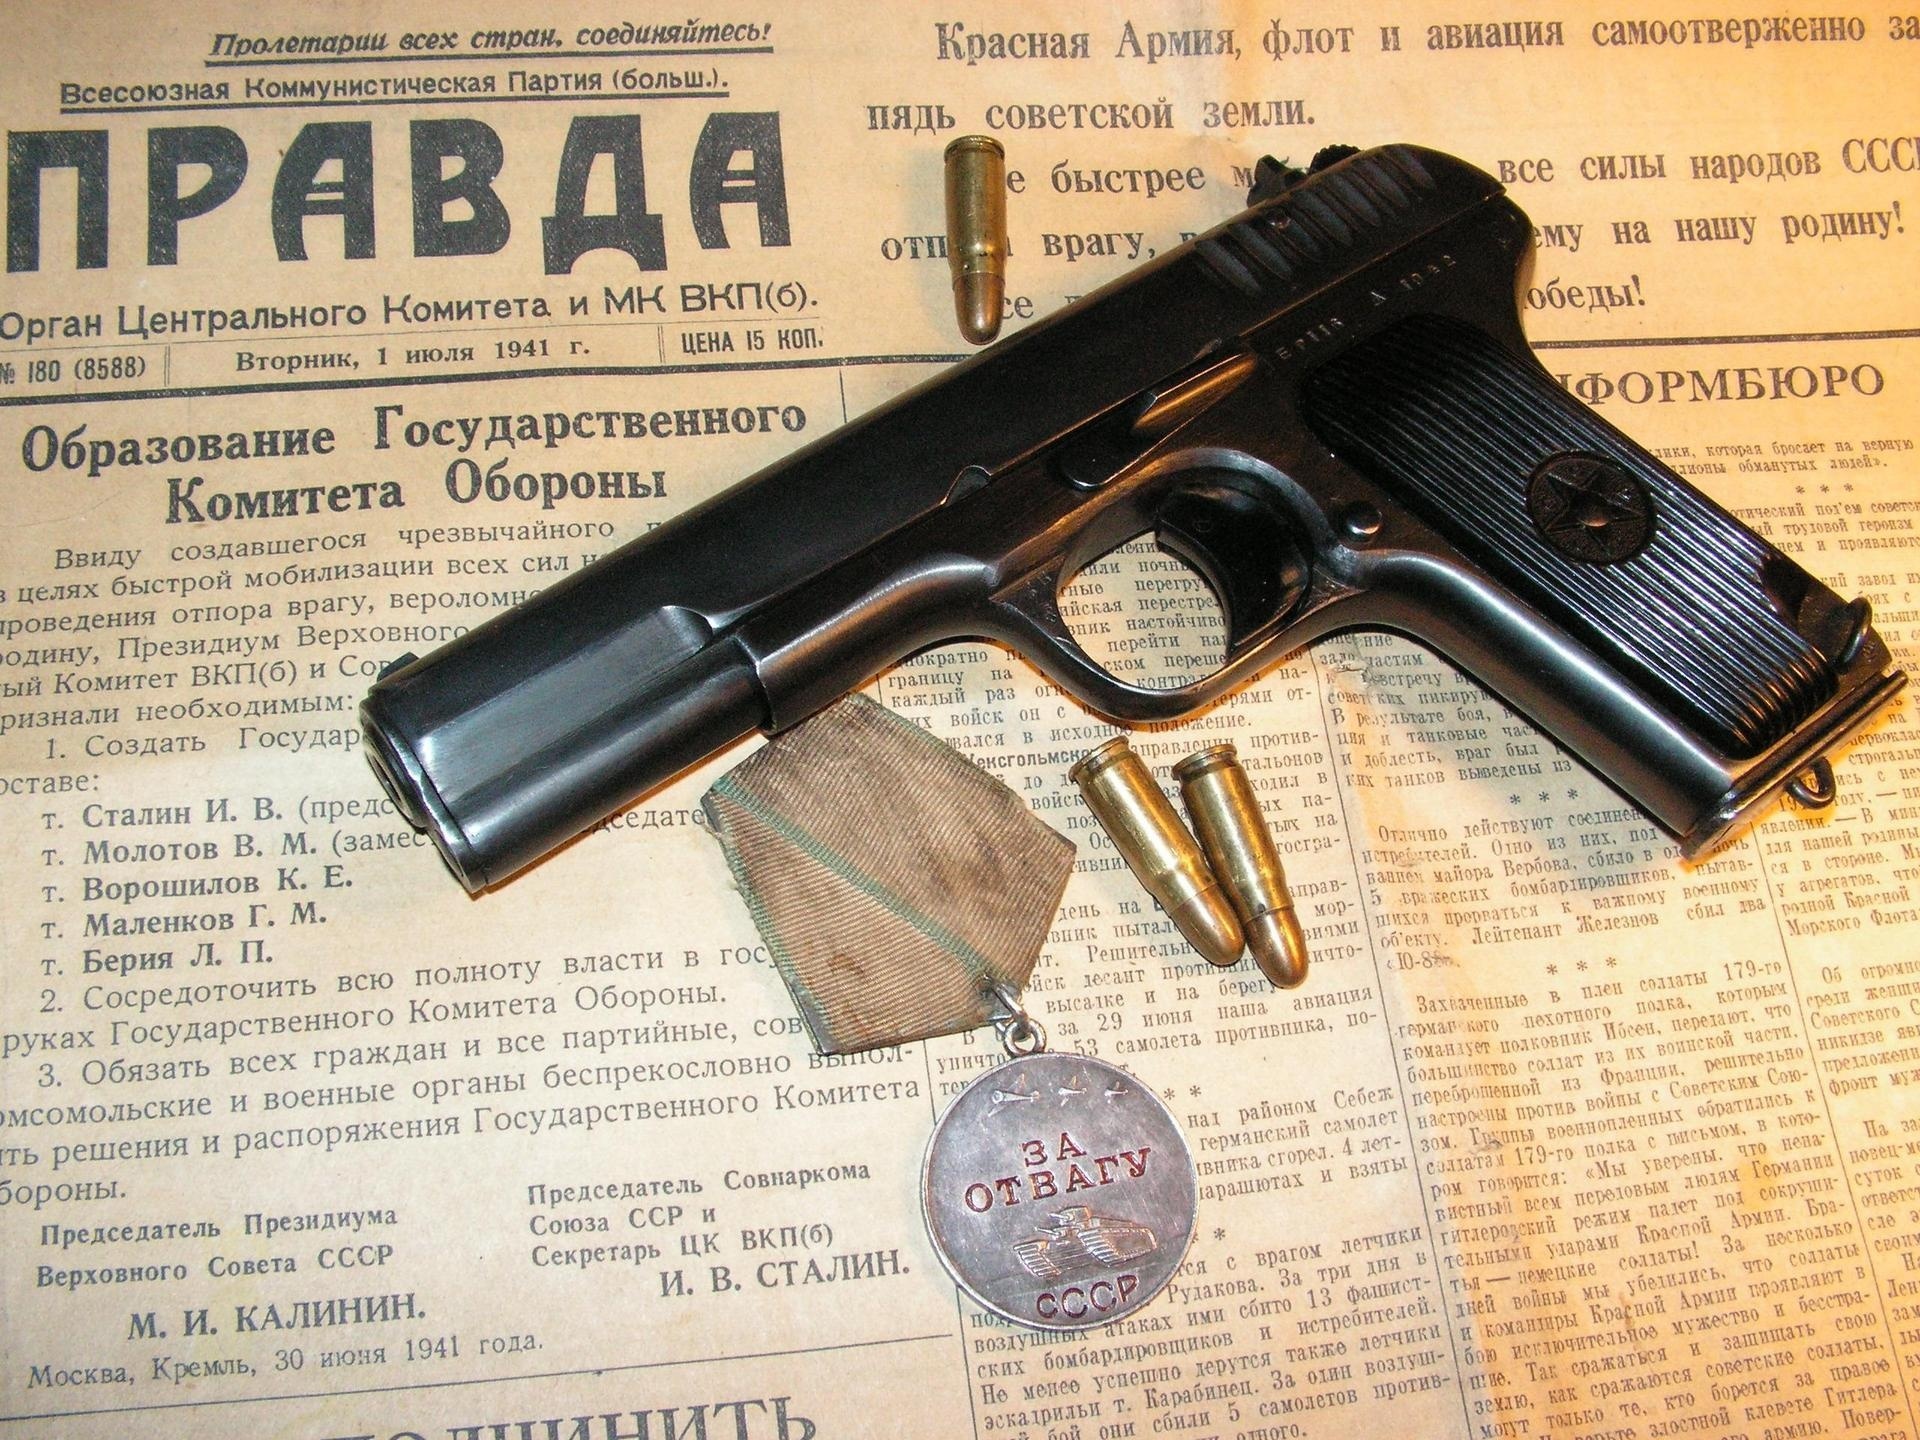 Man Made Pistol HD Wallpaper | Background Image